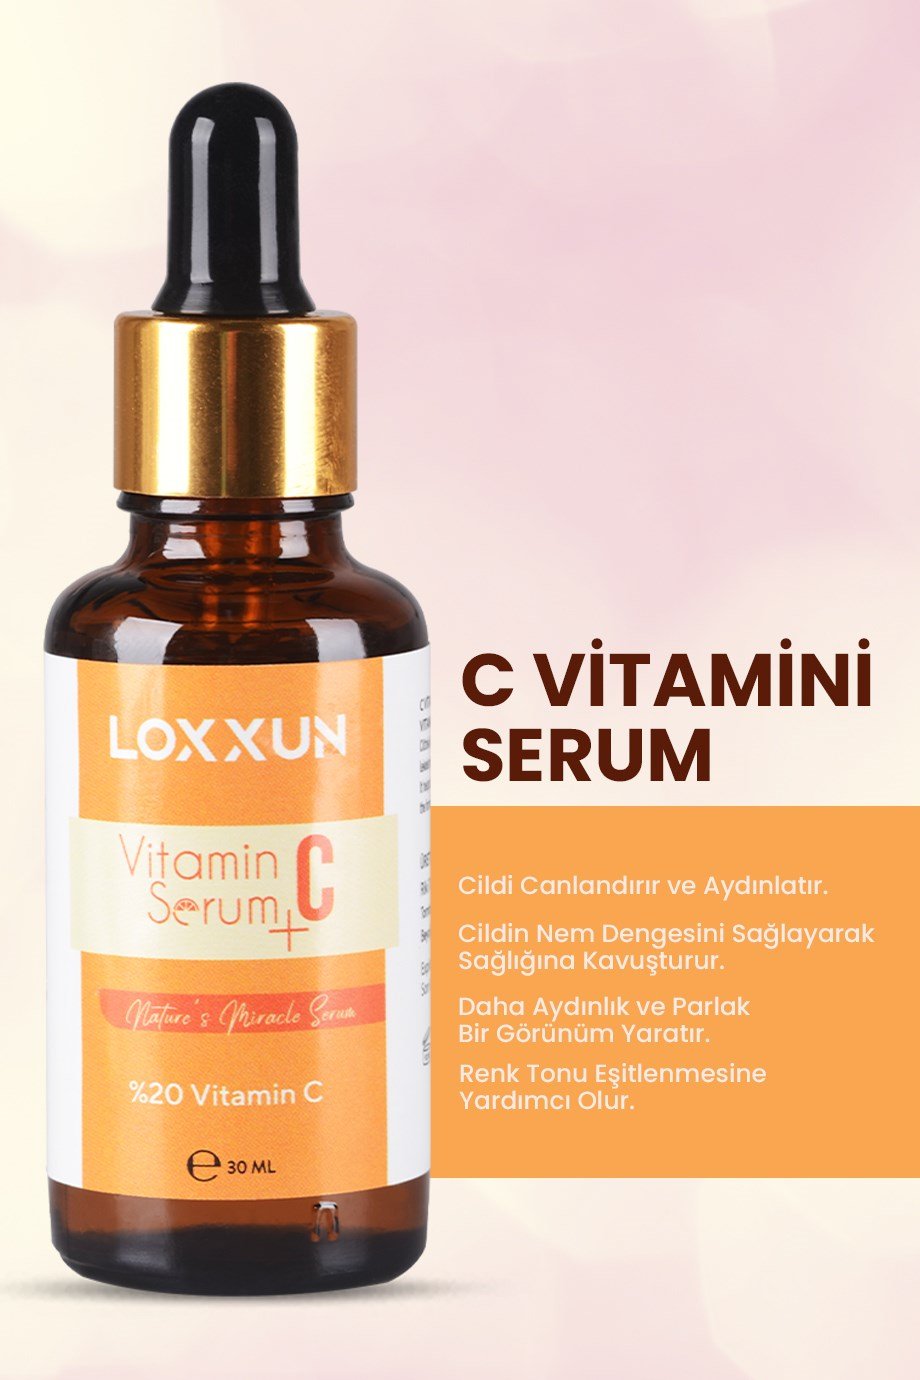 C Vitamini Serum + Kolajen Serum + Beyazlatıcı Krem + Leke Kremi Seti -  Loxxun